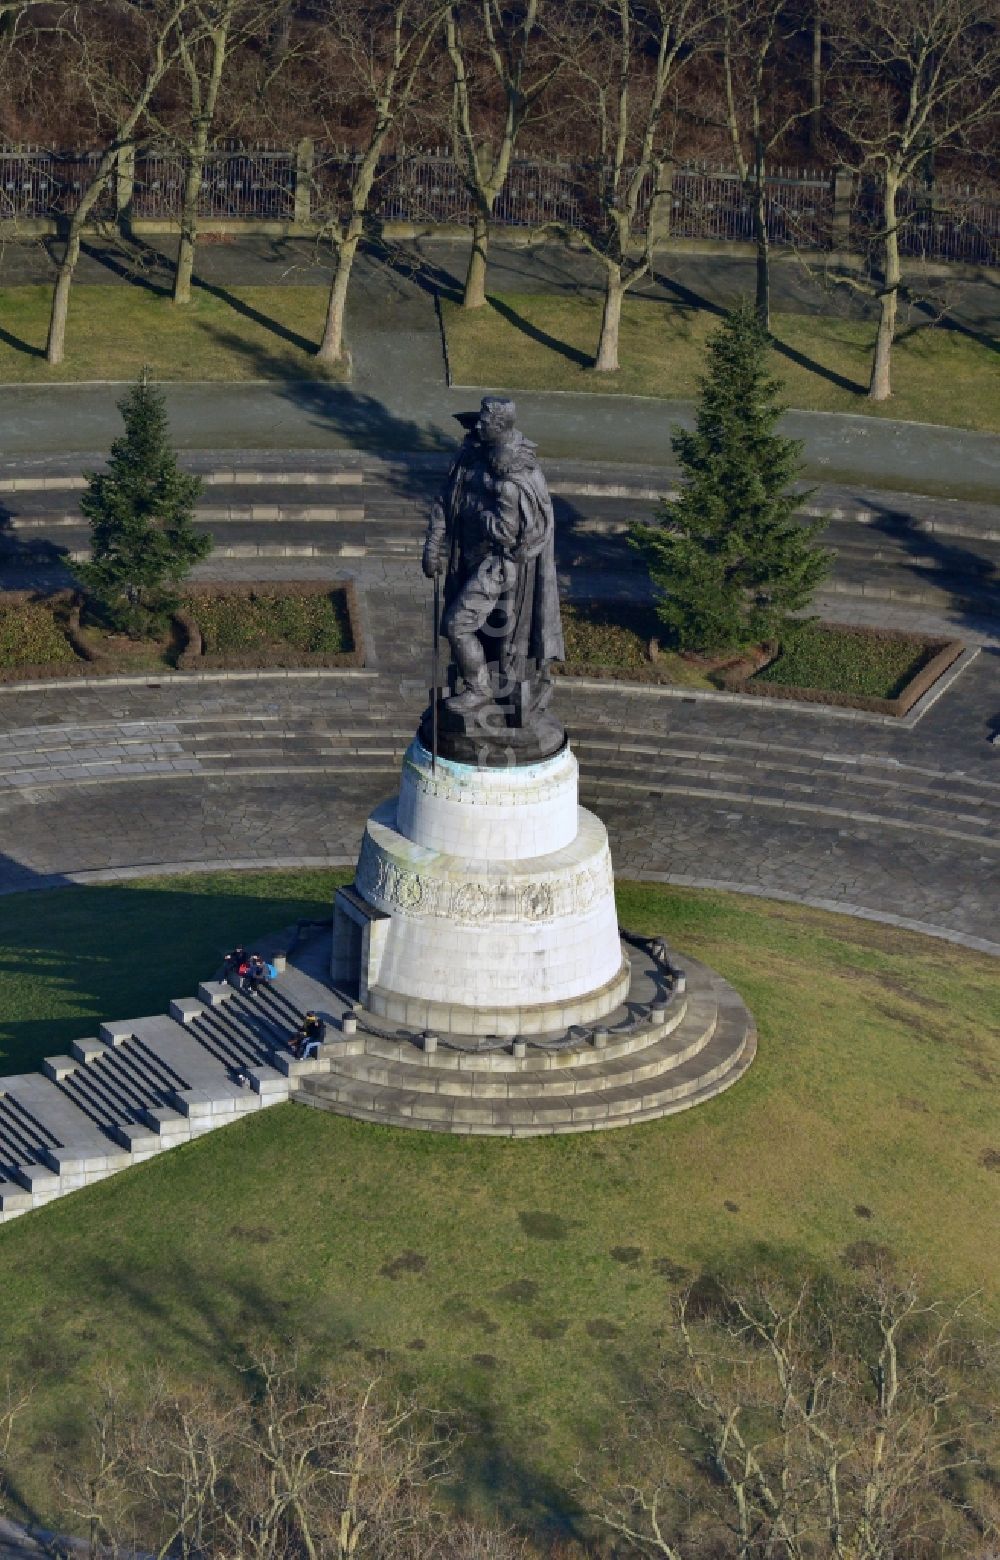 Luftbild Berlin Treptow - Sowjetisches - russisches Kriegerdenkmal - Ehrenmal im Treptower Park in Berlin im Bundesland Berlin